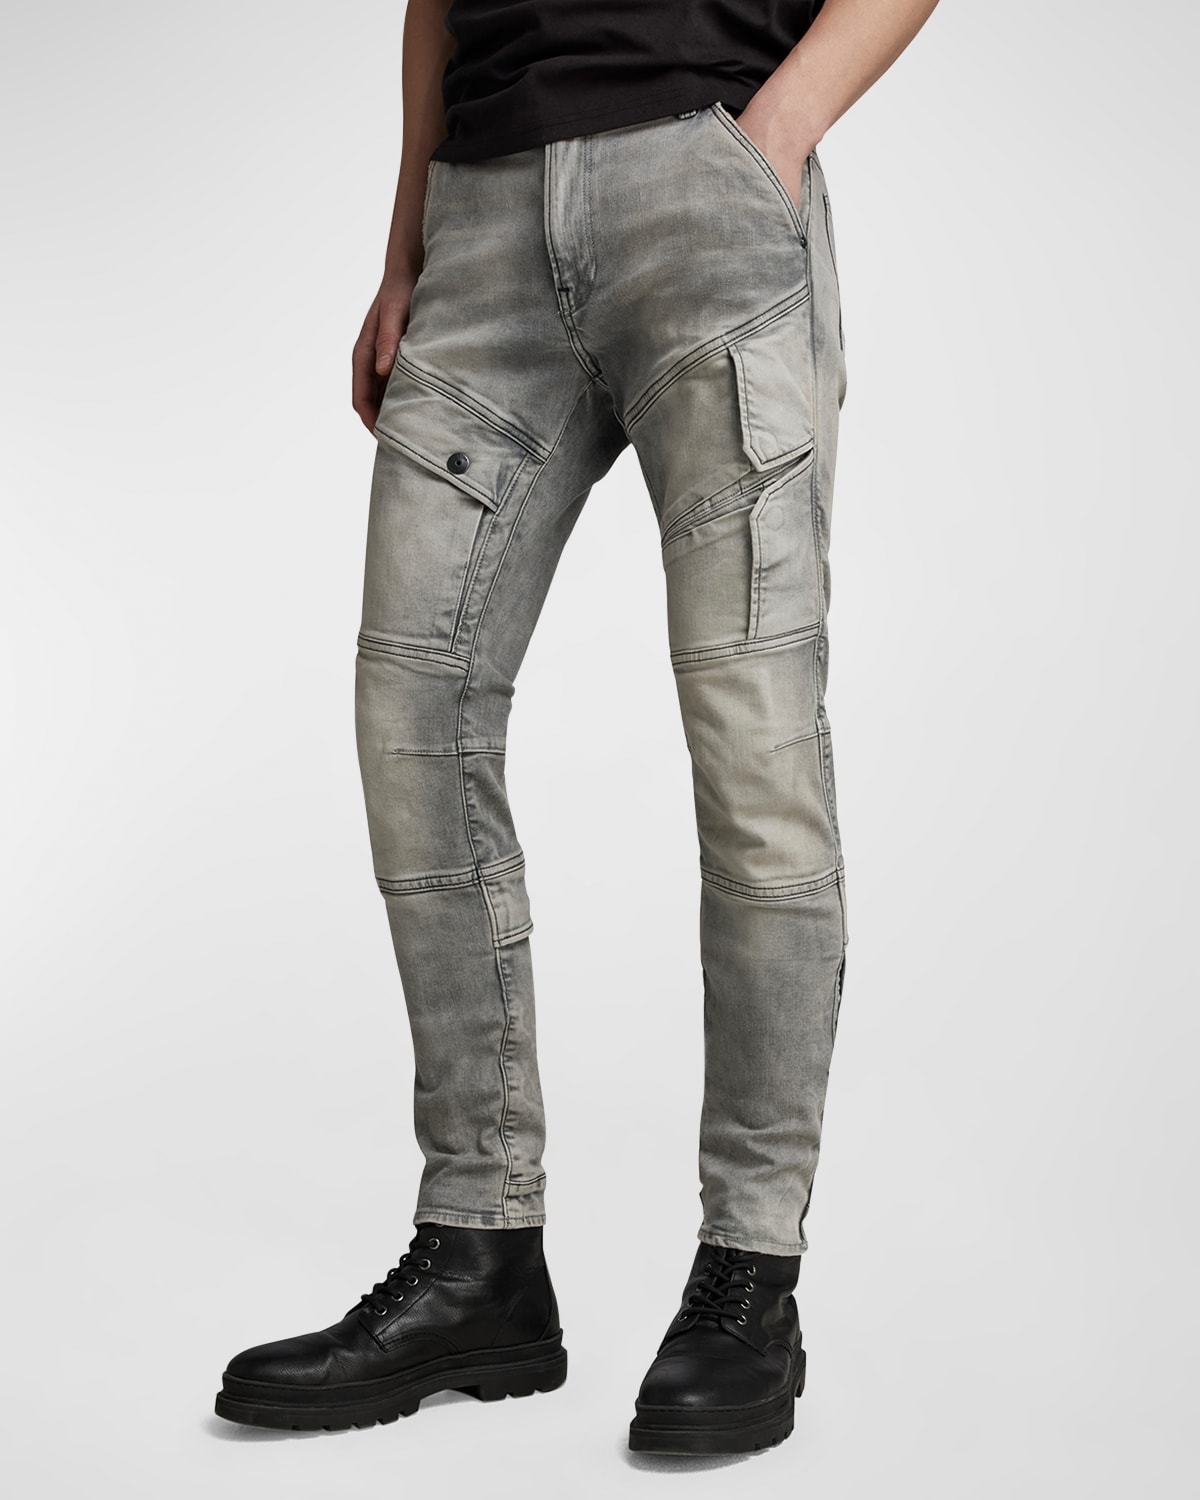 G-STAR RAW Men's Airblaze 3D Skinny Jeans